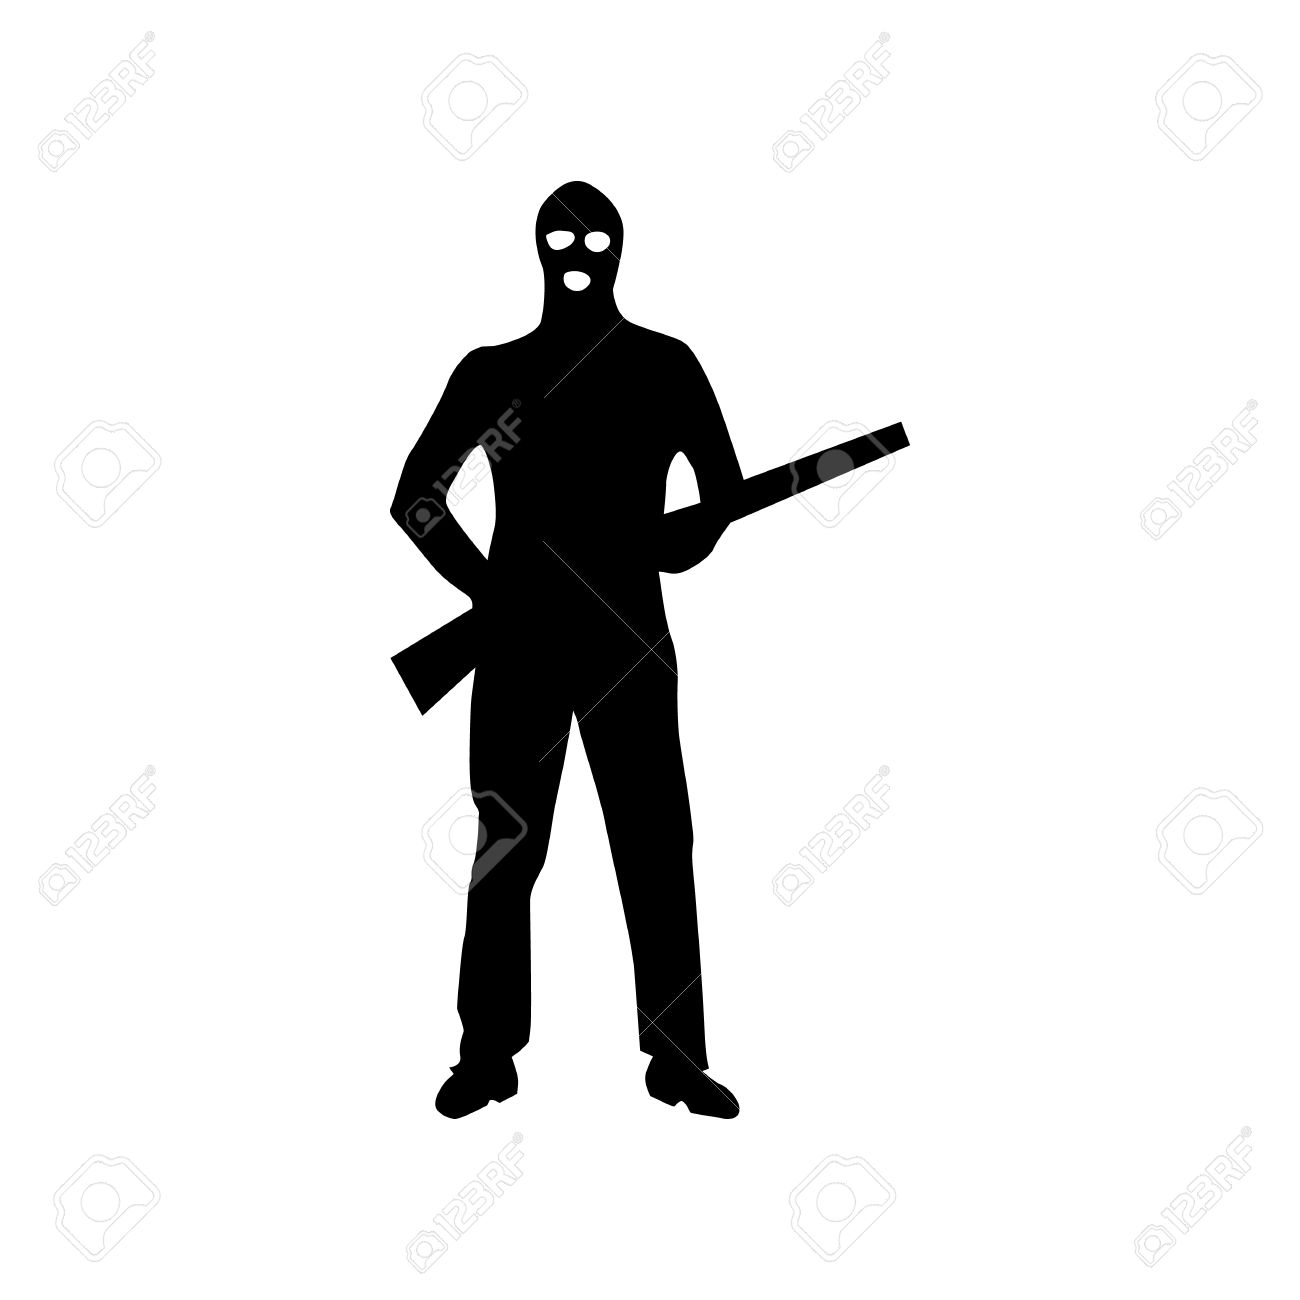 Robber silhouette black